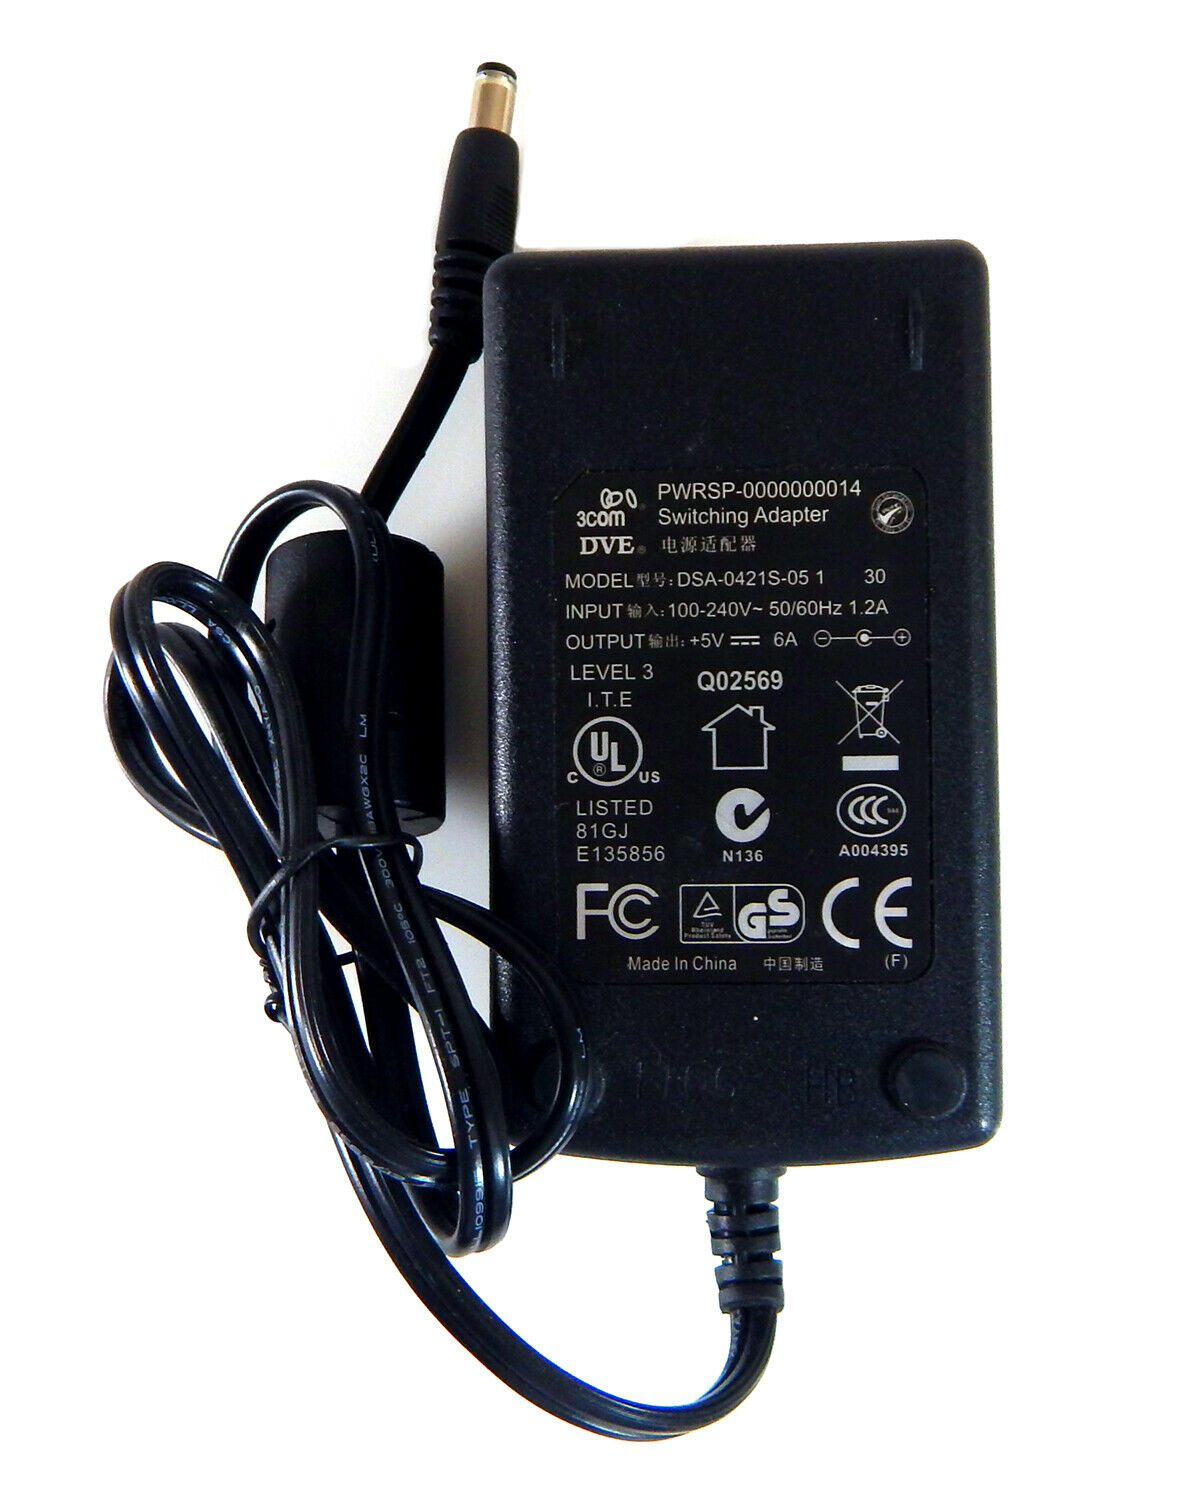 DVE 3COM 5VDC 6A Switching AC Adapter New DSA-0421S-05 PWRSP-000014 MPN: DSA-0421S-05 Brand: 3Com UPC: 64581414679 - Click Image to Close